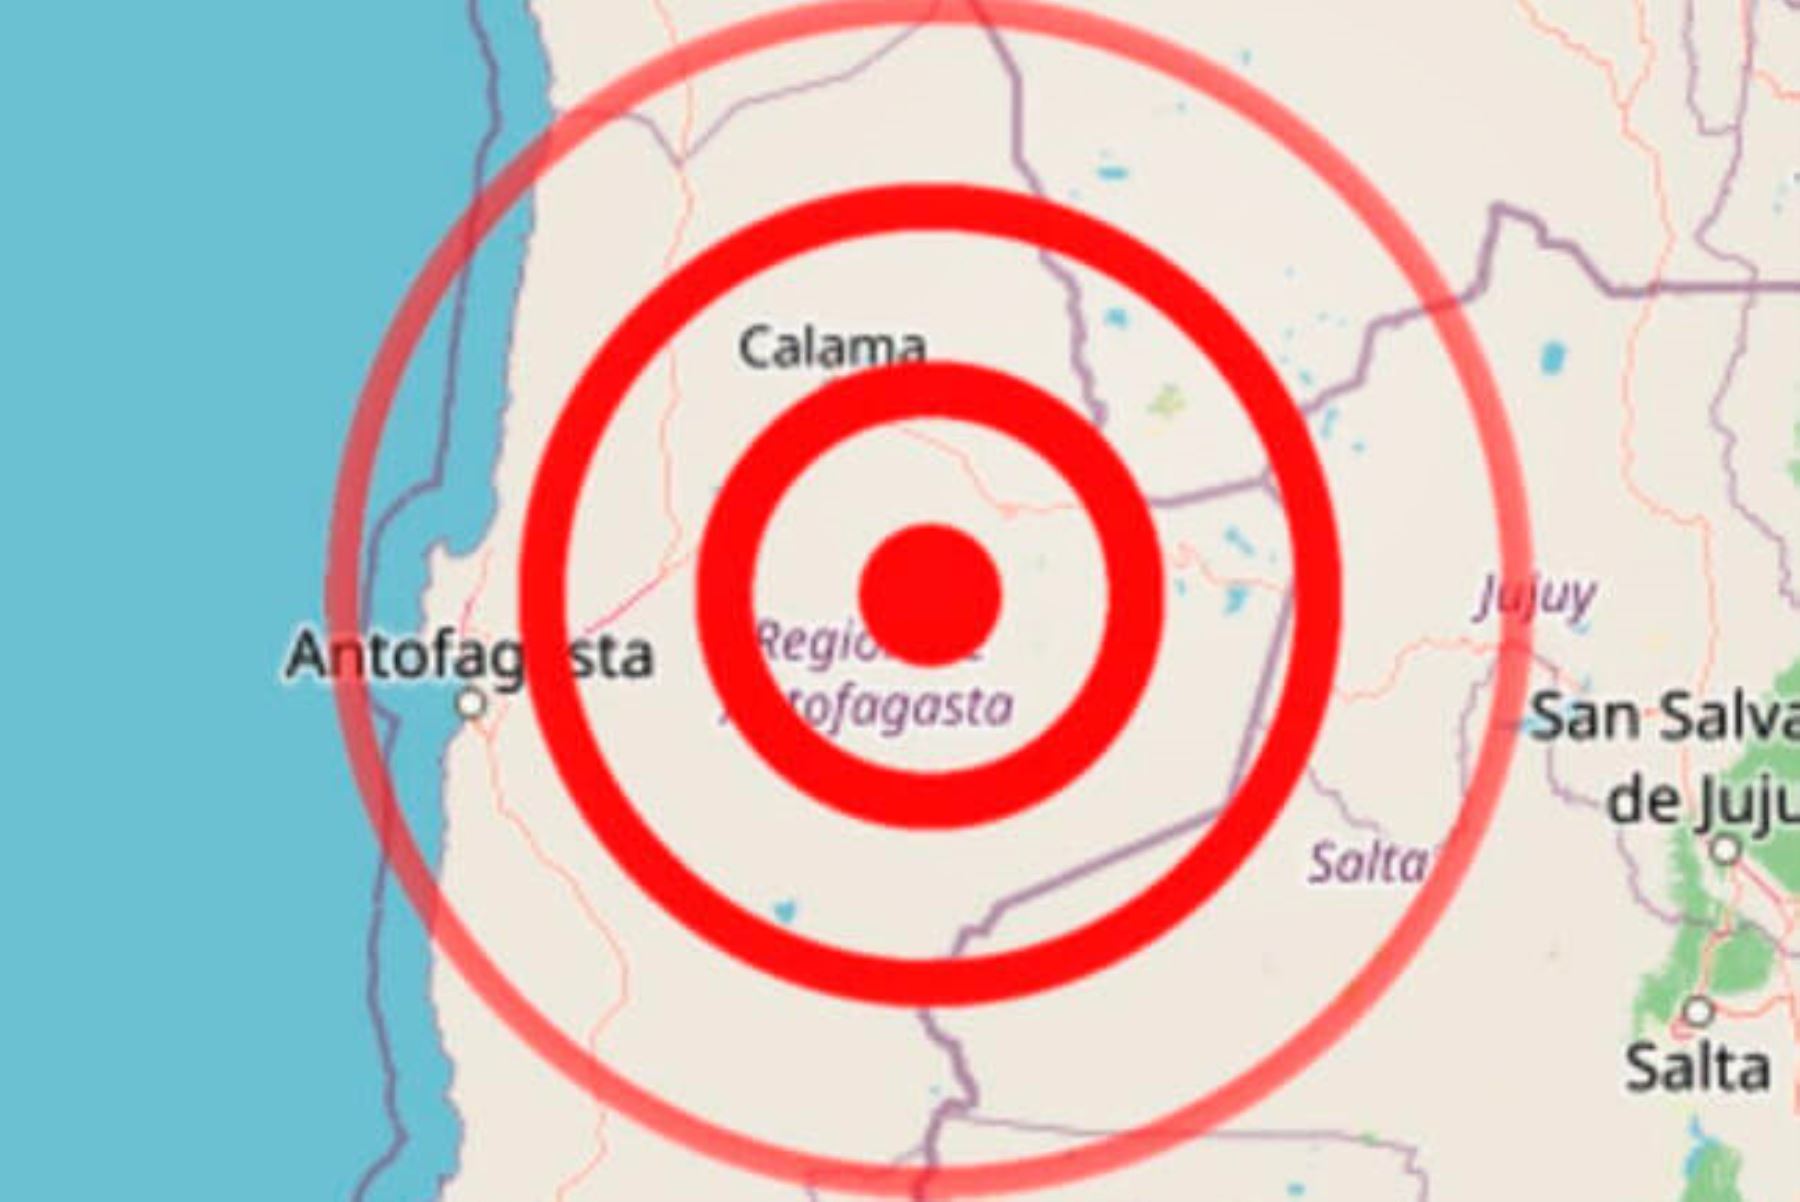 norte de chile registro sismo de 68 de magnitud laverdaddemonagas.com 000867291w